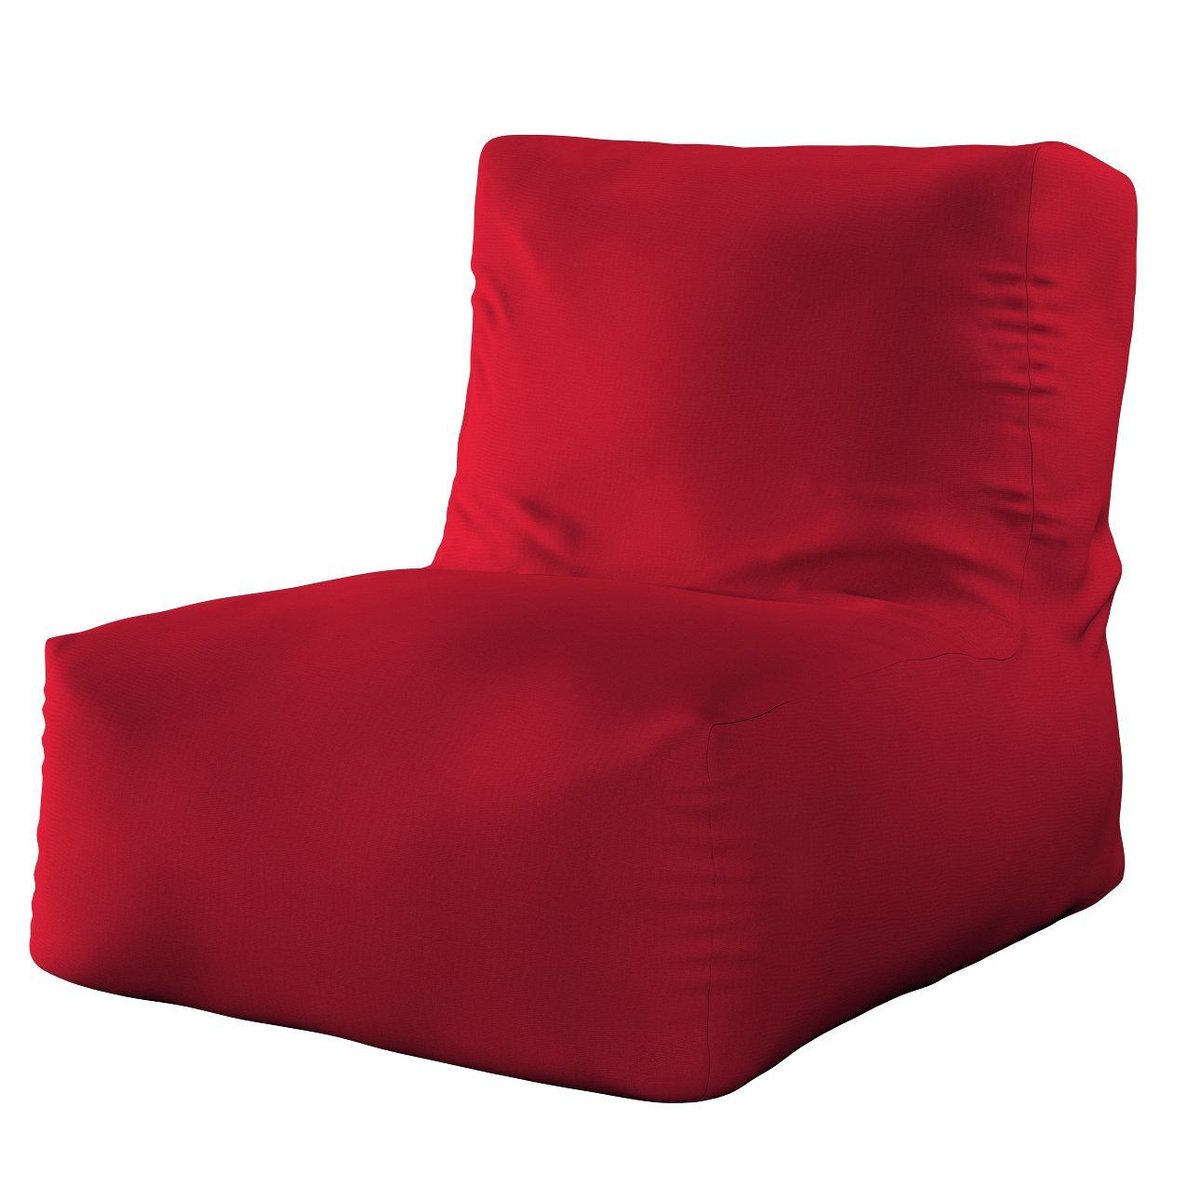 Dekoria Pufa fotel czerwony 67 × 31 × 75 cm Etna 1241-705-60